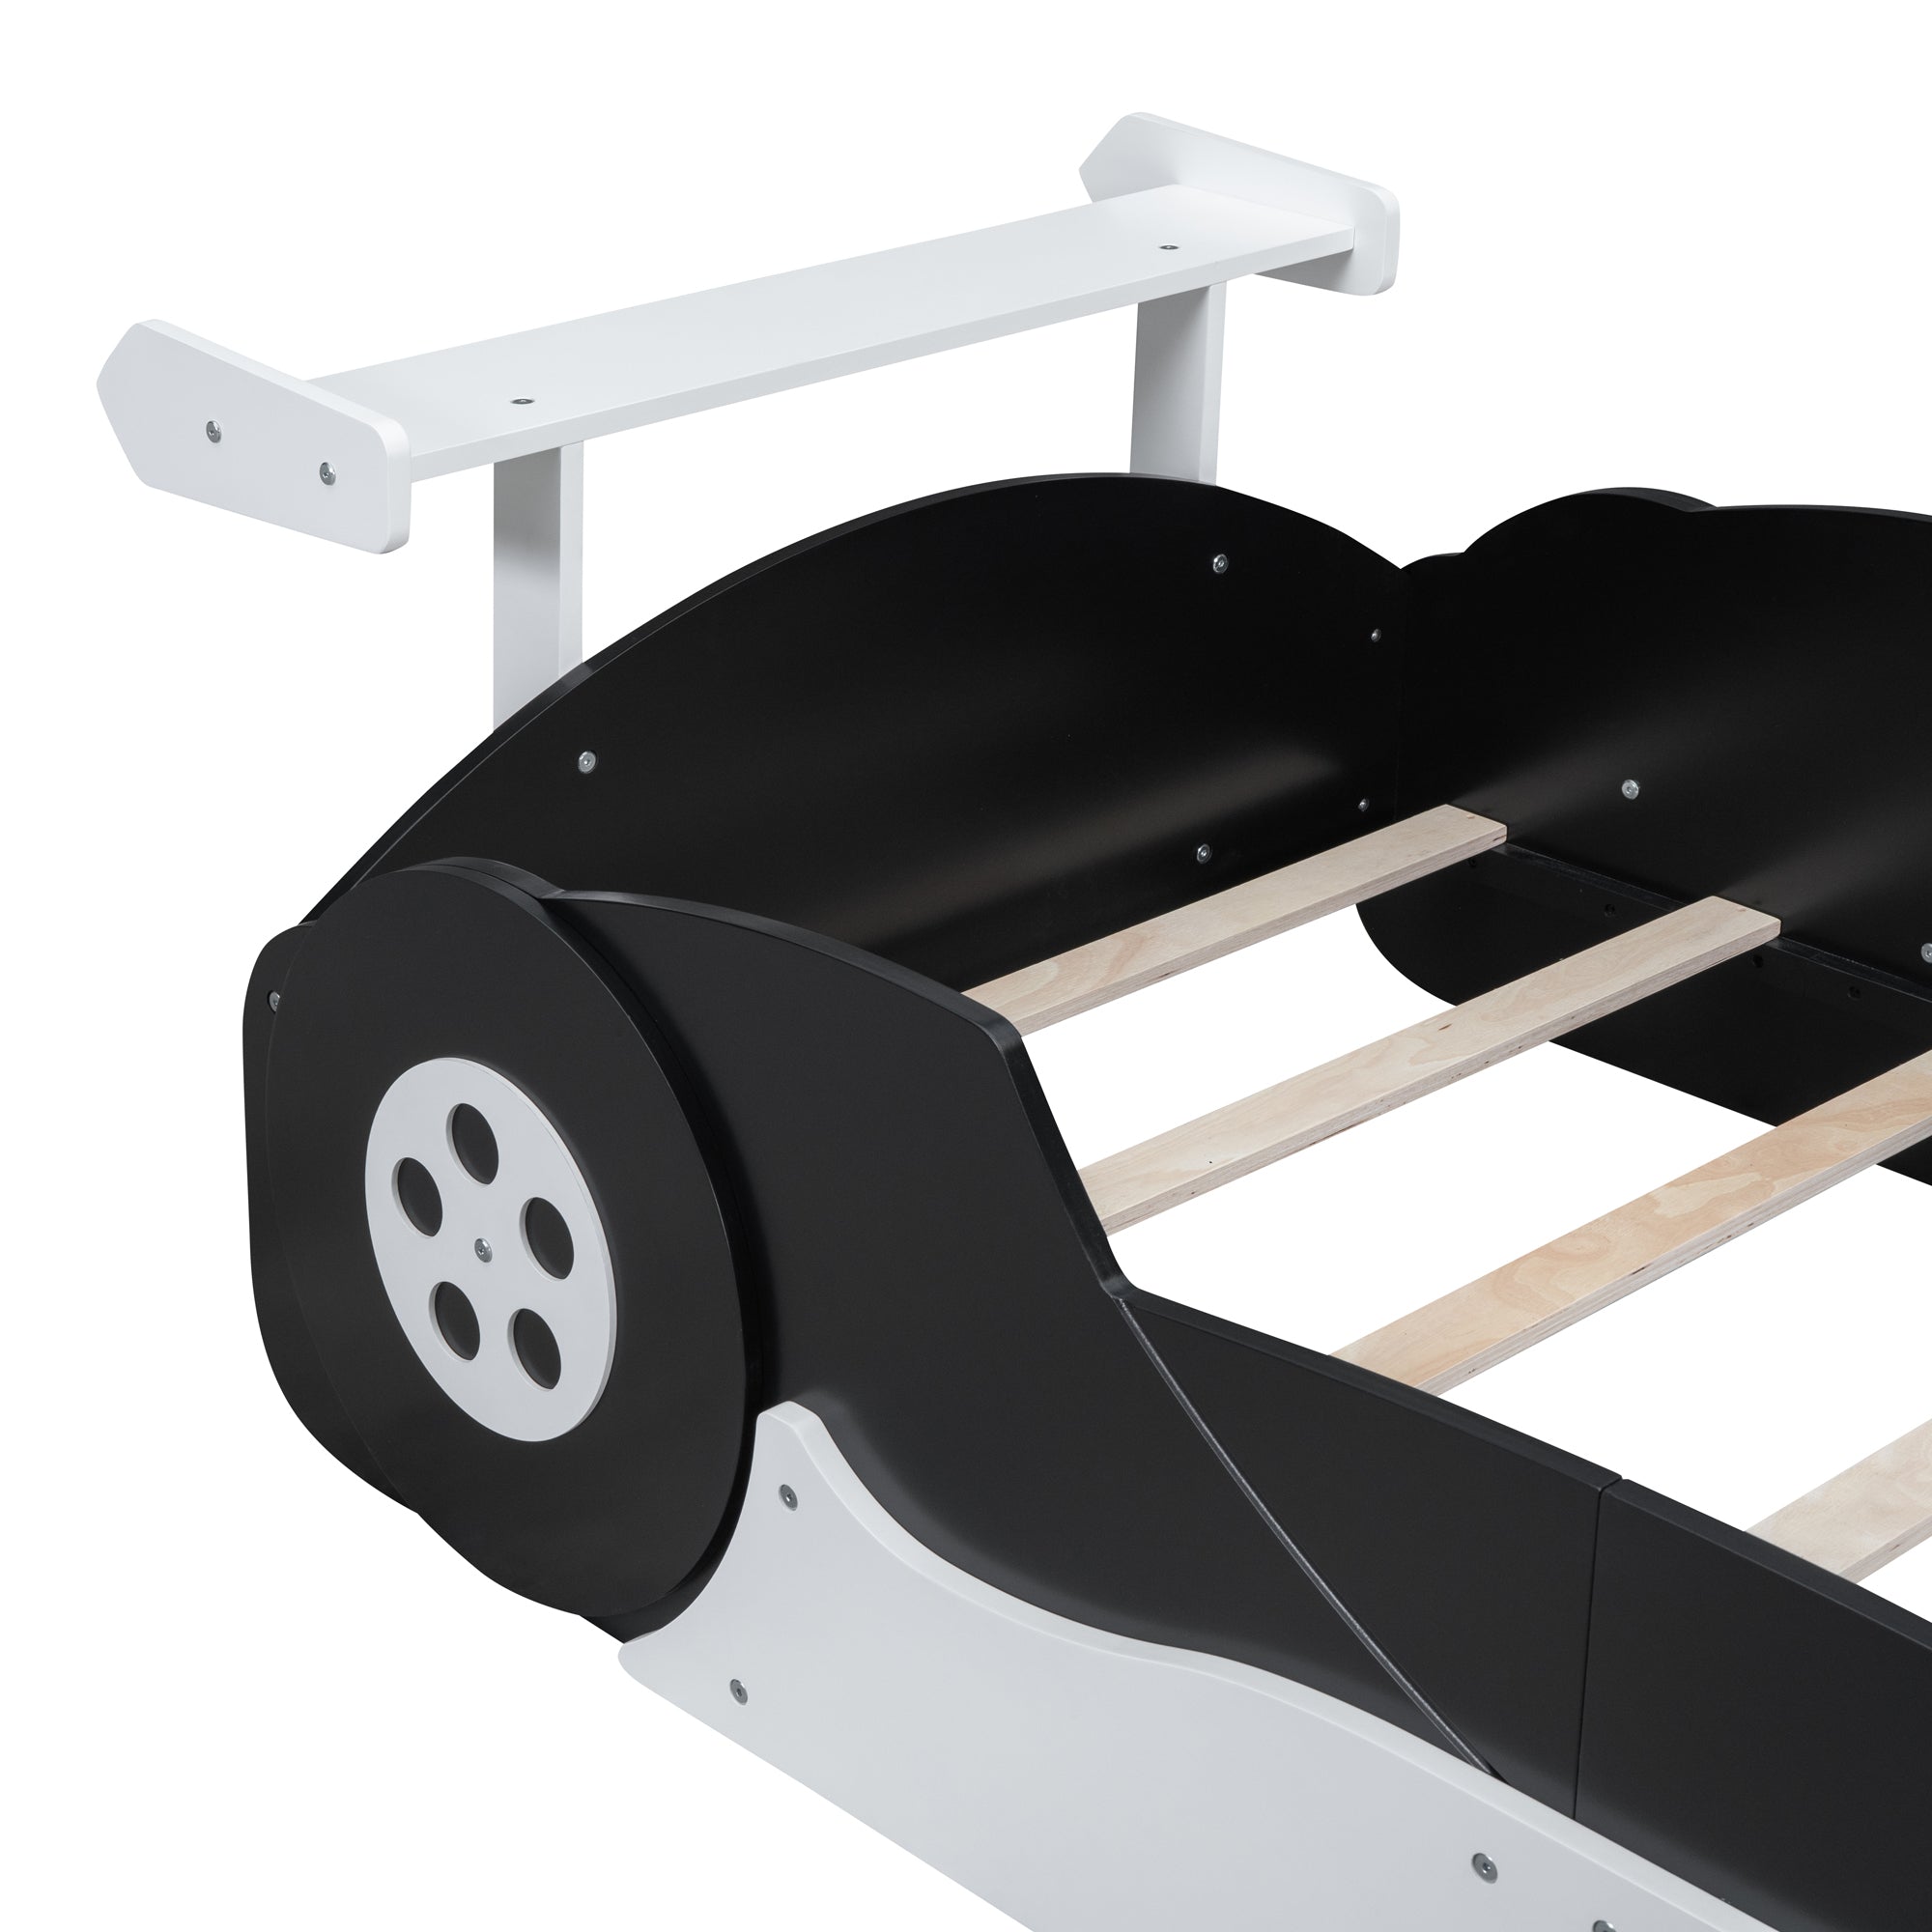 Bellemave Race Car-Shaped Platform Bed with Wheels